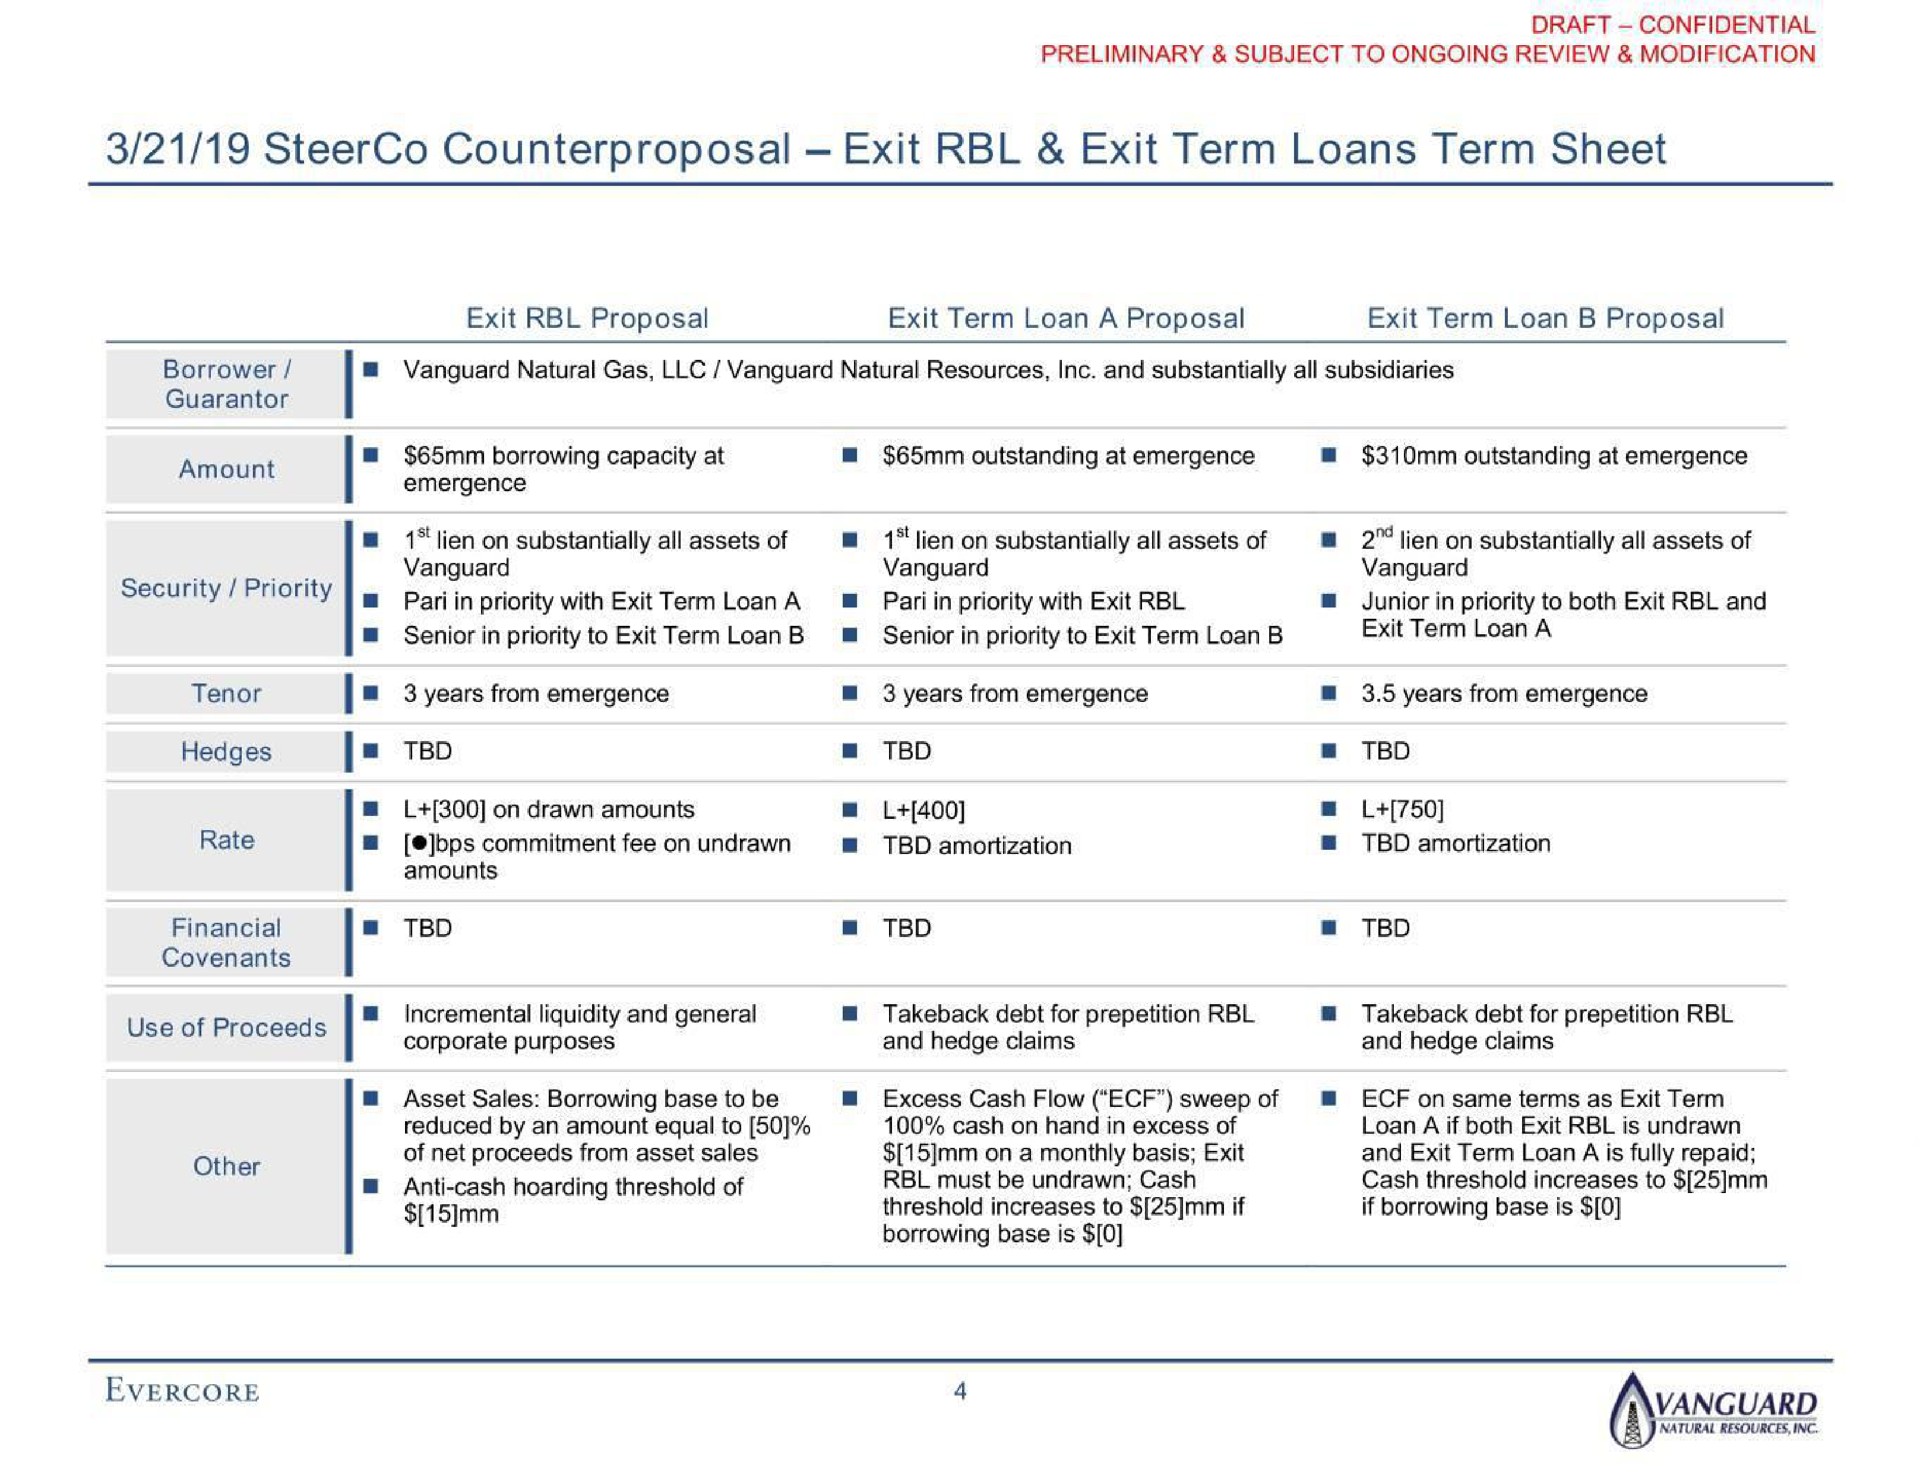 counterproposal exit exit term loans term sheet vanguard | Evercore